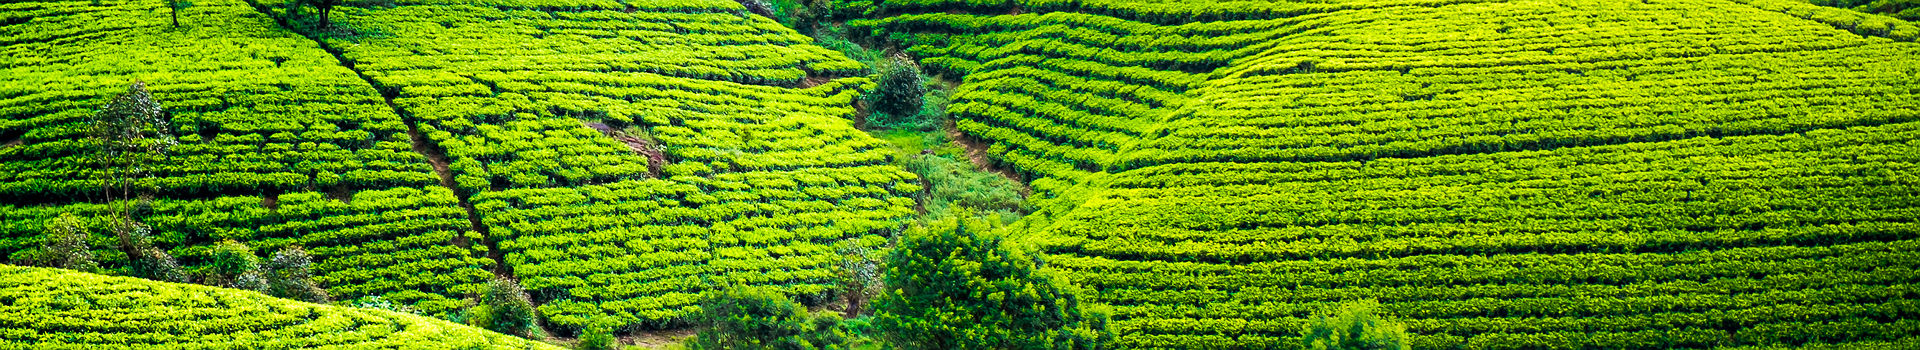 Sri Lanka - Plantations de thé